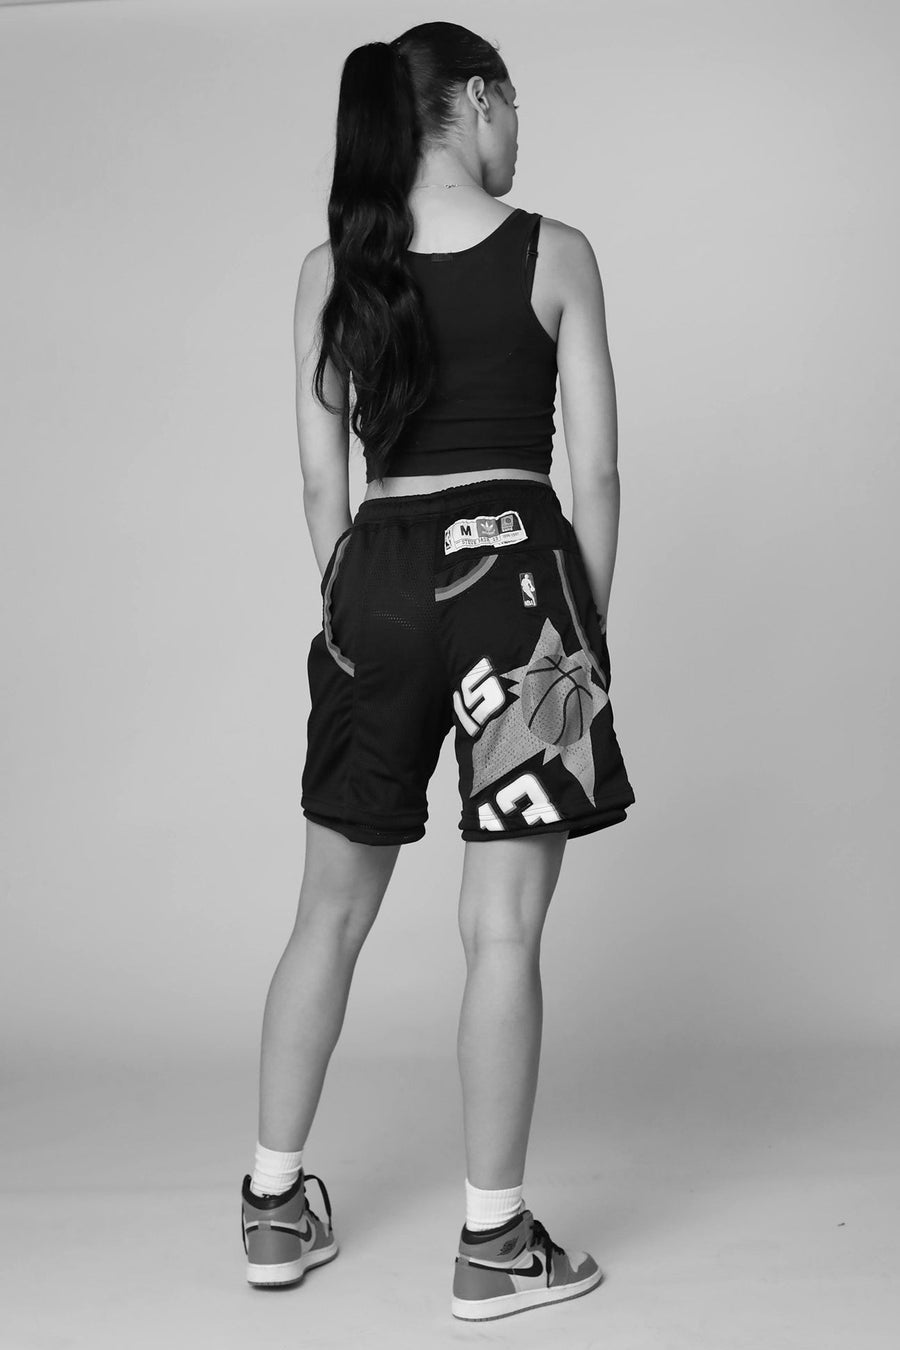 Unisex Rework San Antonio Spurs NBA Jersey Shorts - L